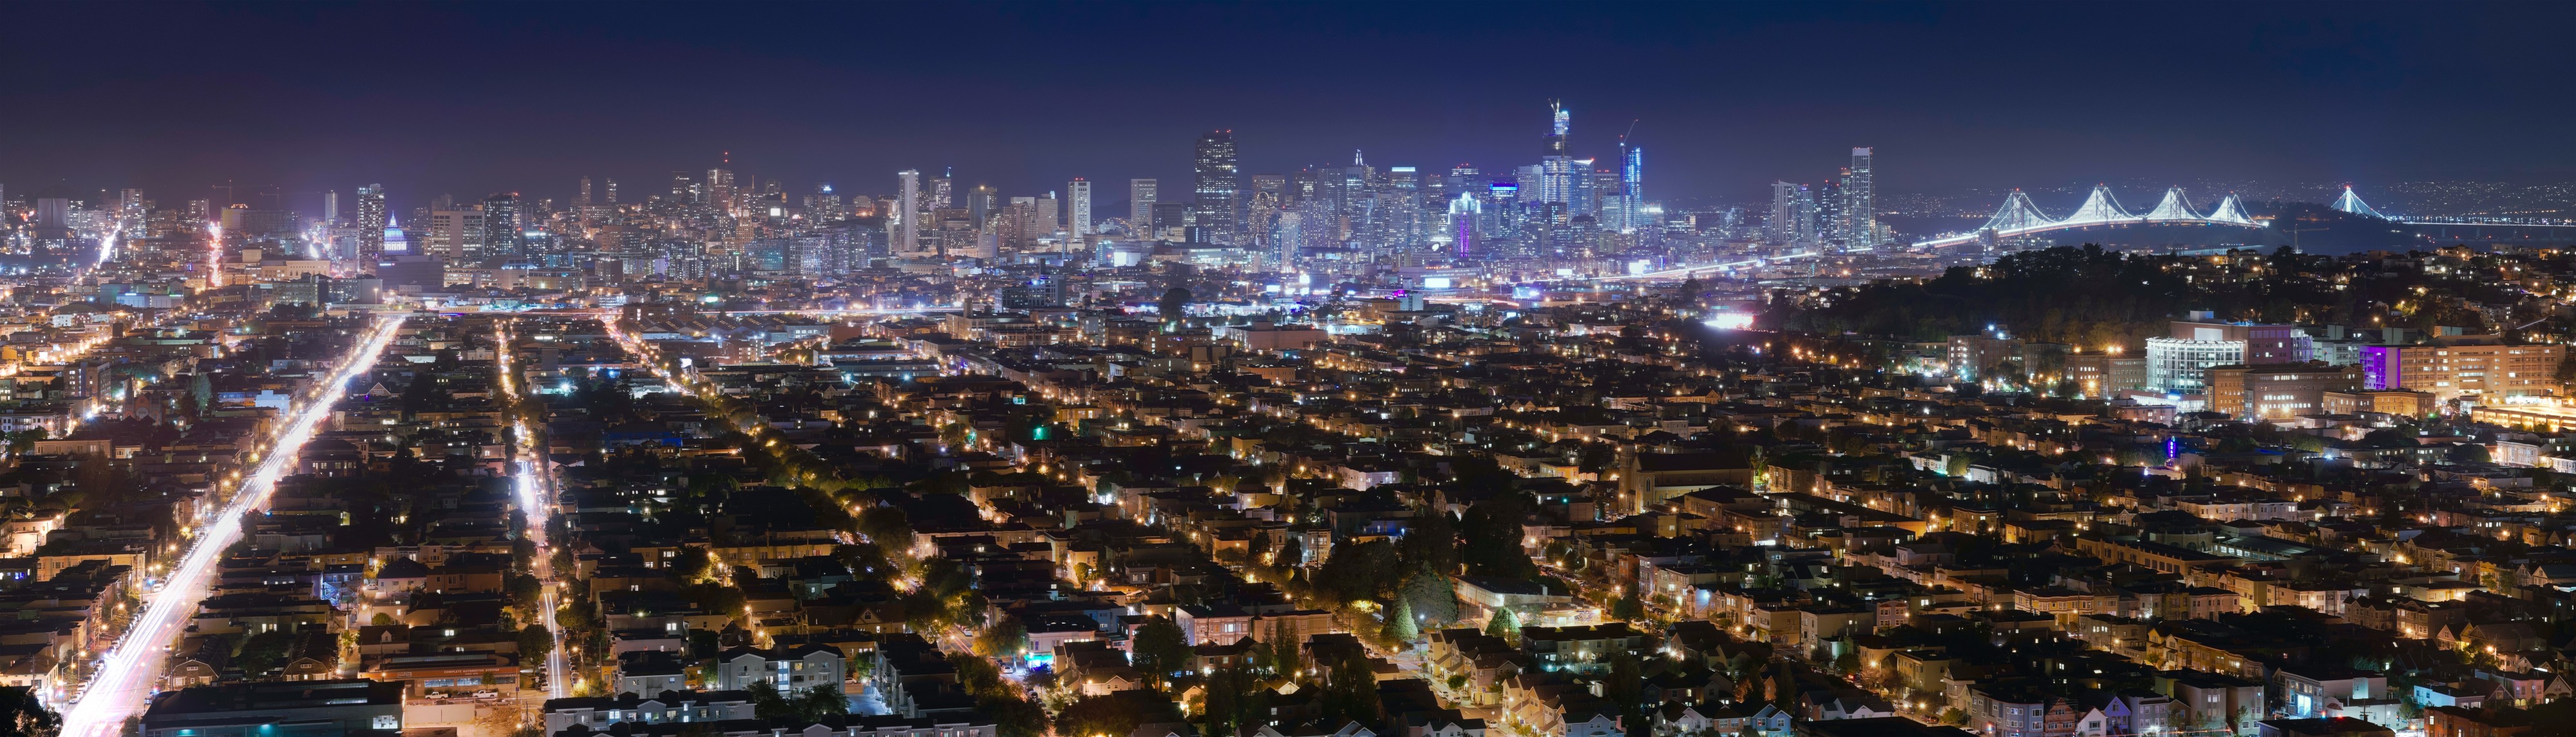 San Francisco nighttime skyline from Bernal Heights